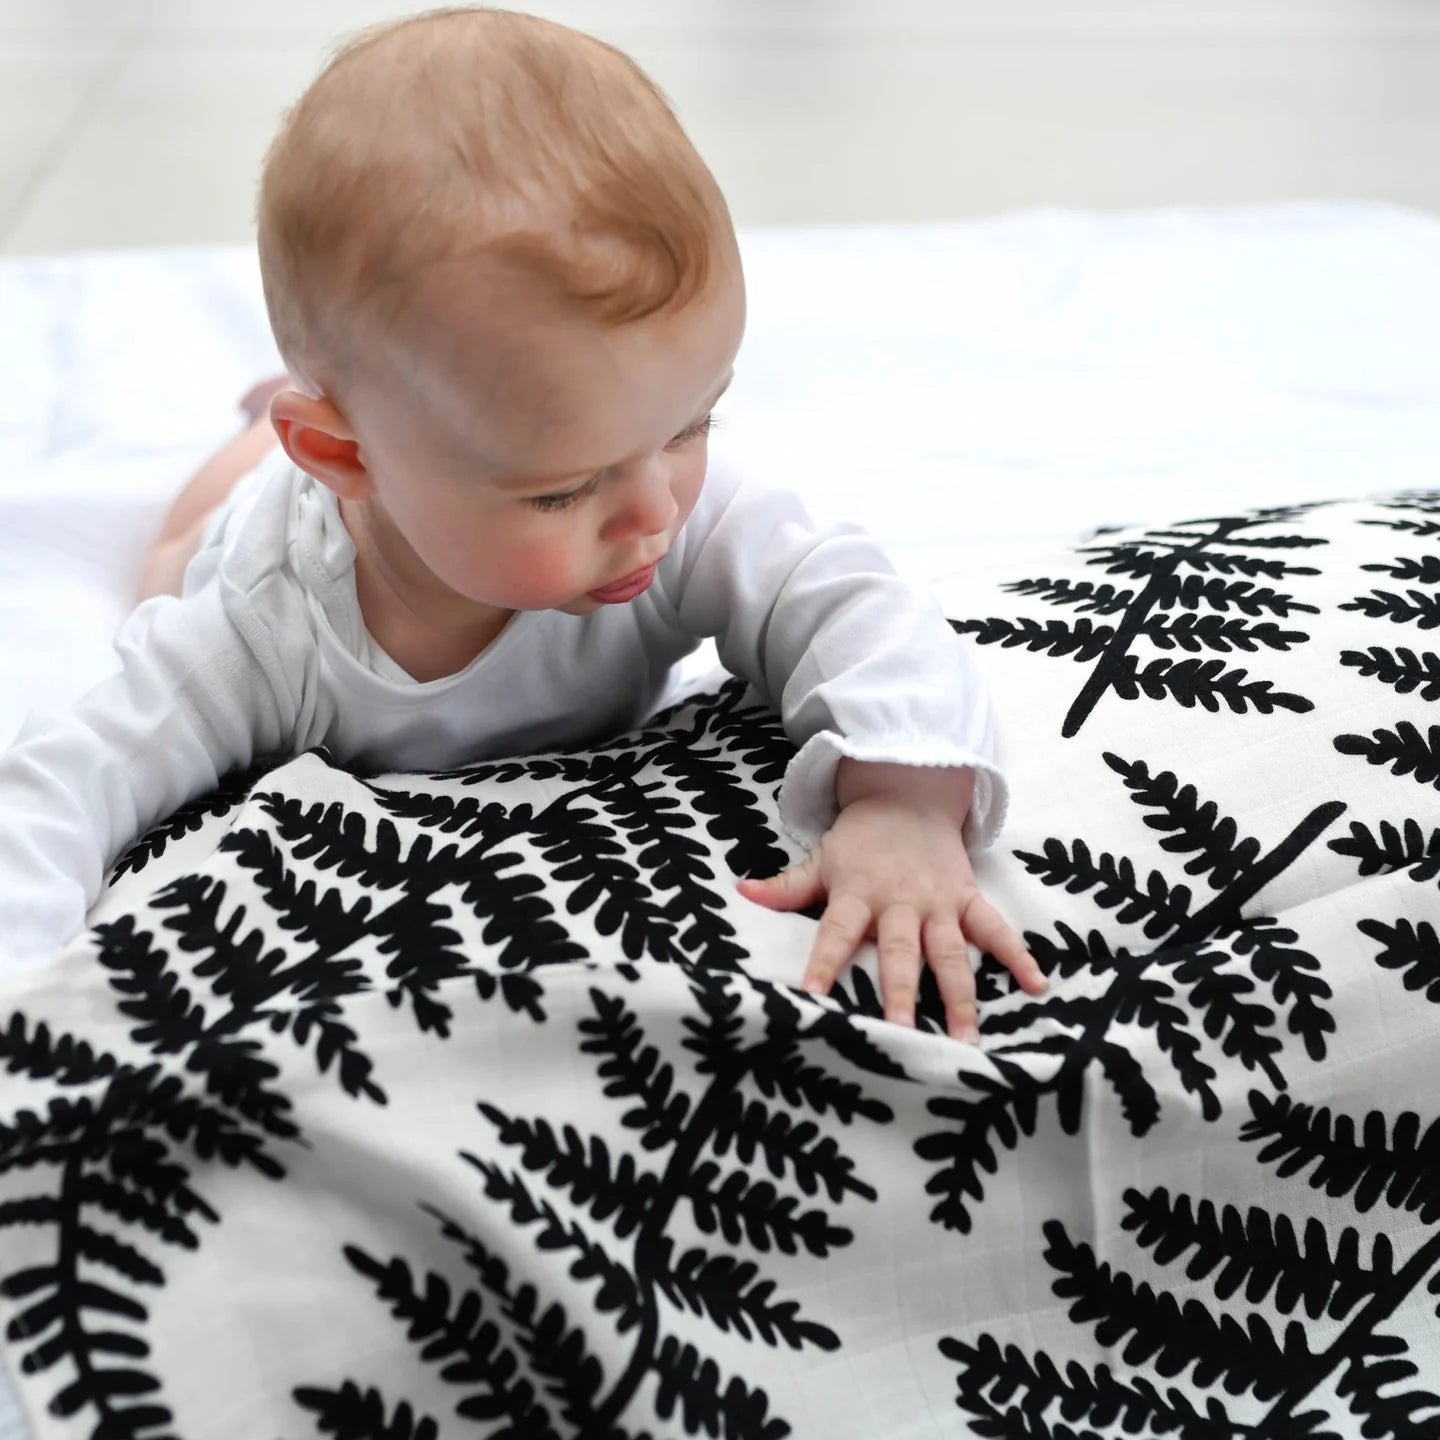 XL FERN MUSLIN - for newborn to 4 months old babies | BY ETTA LOVES